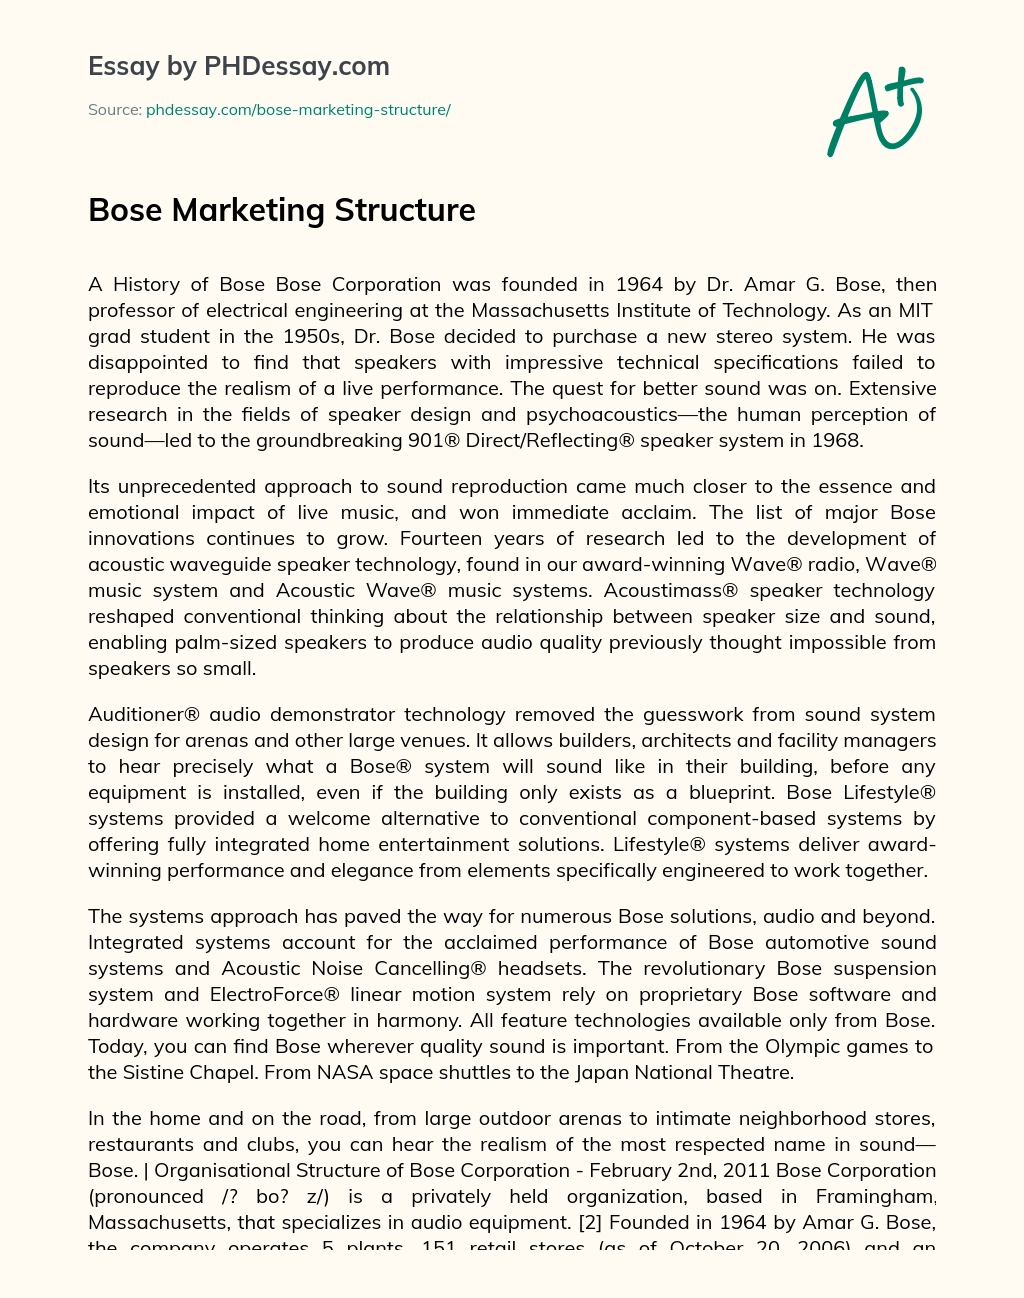 Bose marketing structure essay